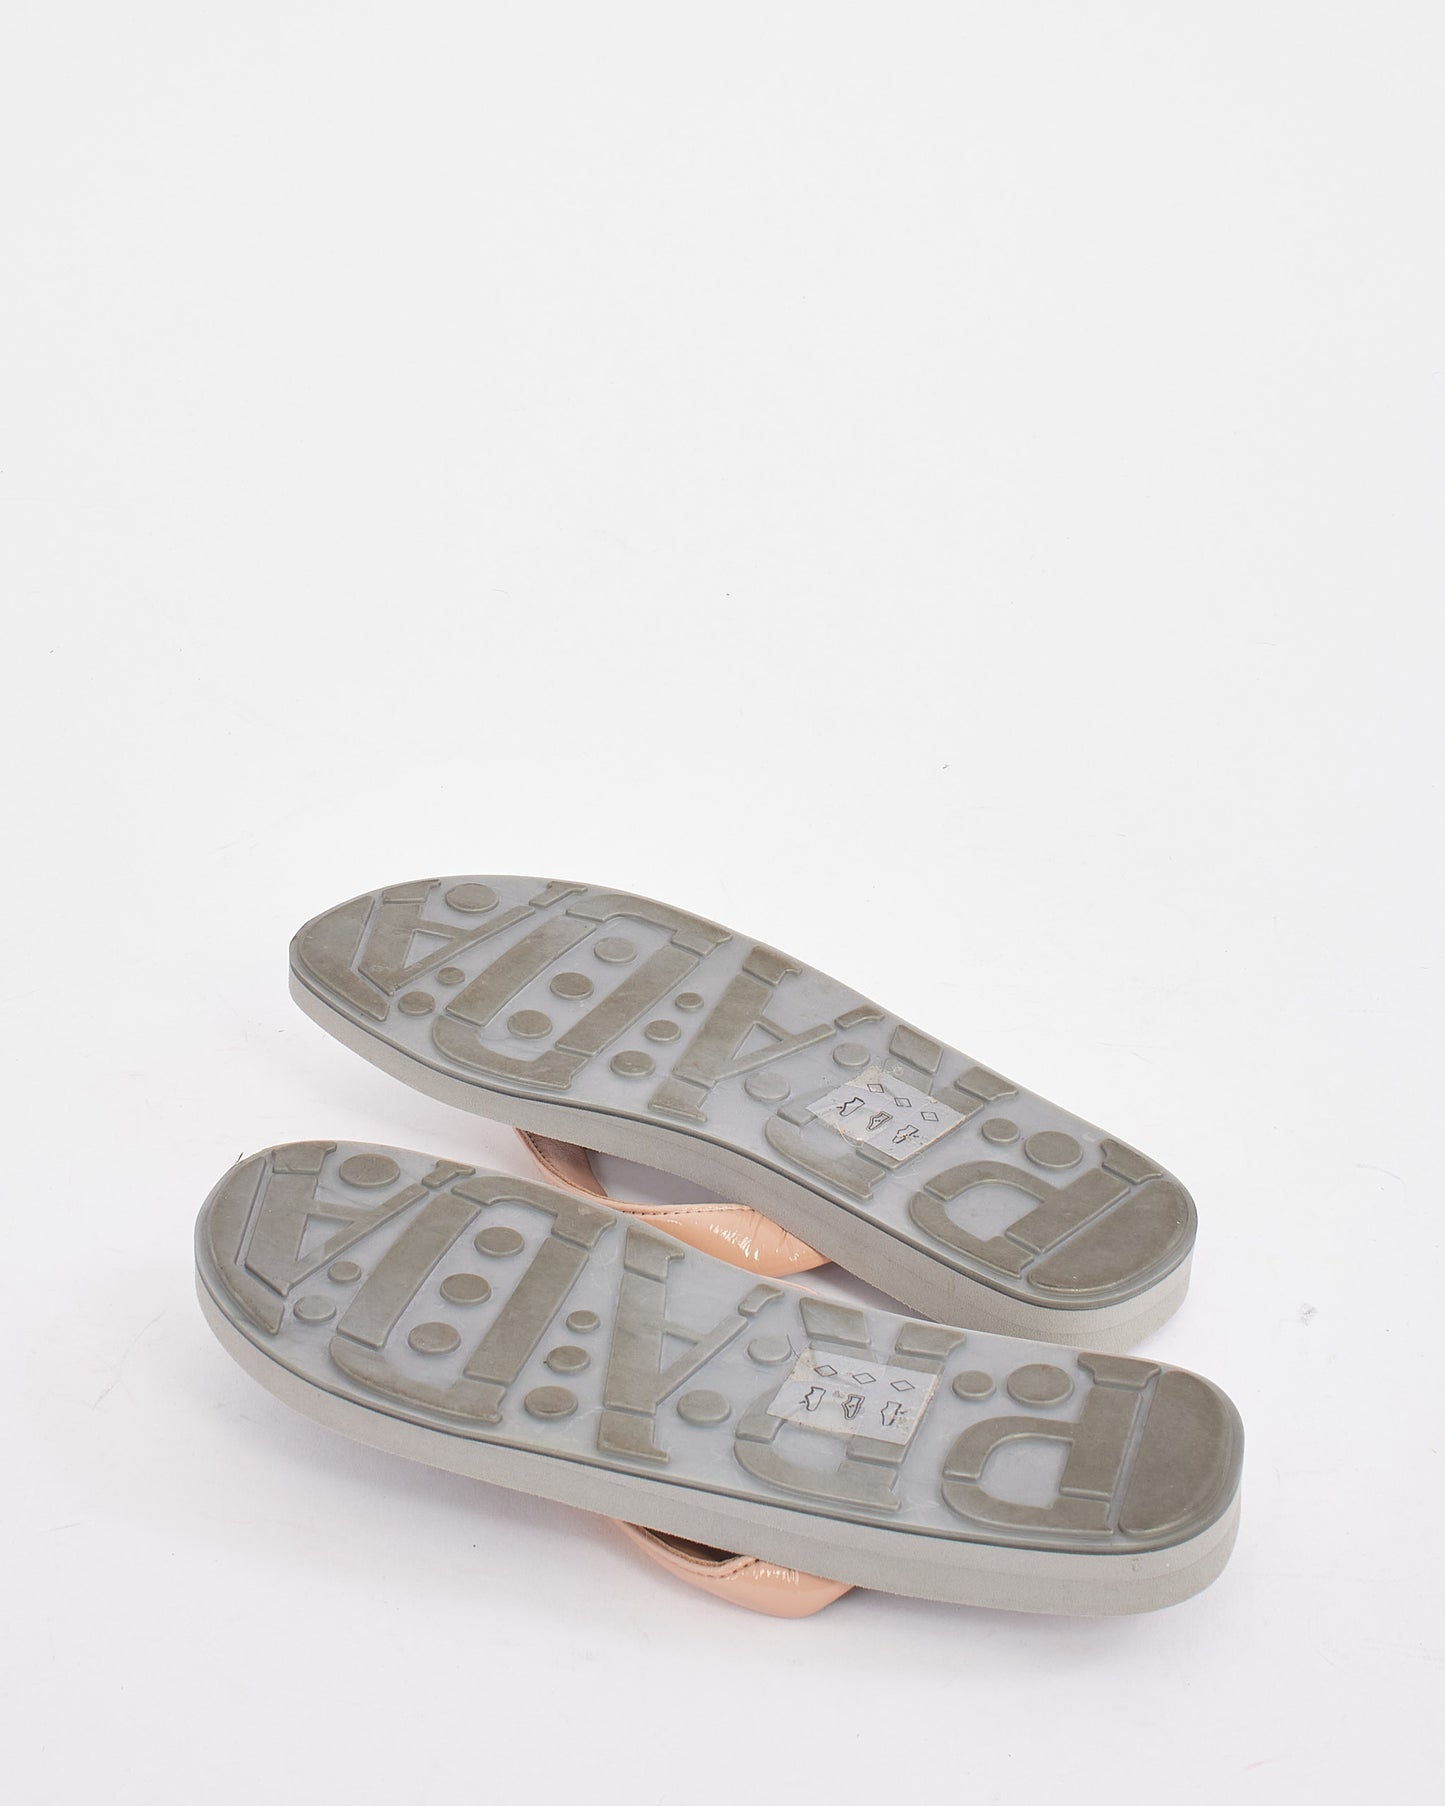 Prada Nude Patent Leather Flip Flop Sandals - 35